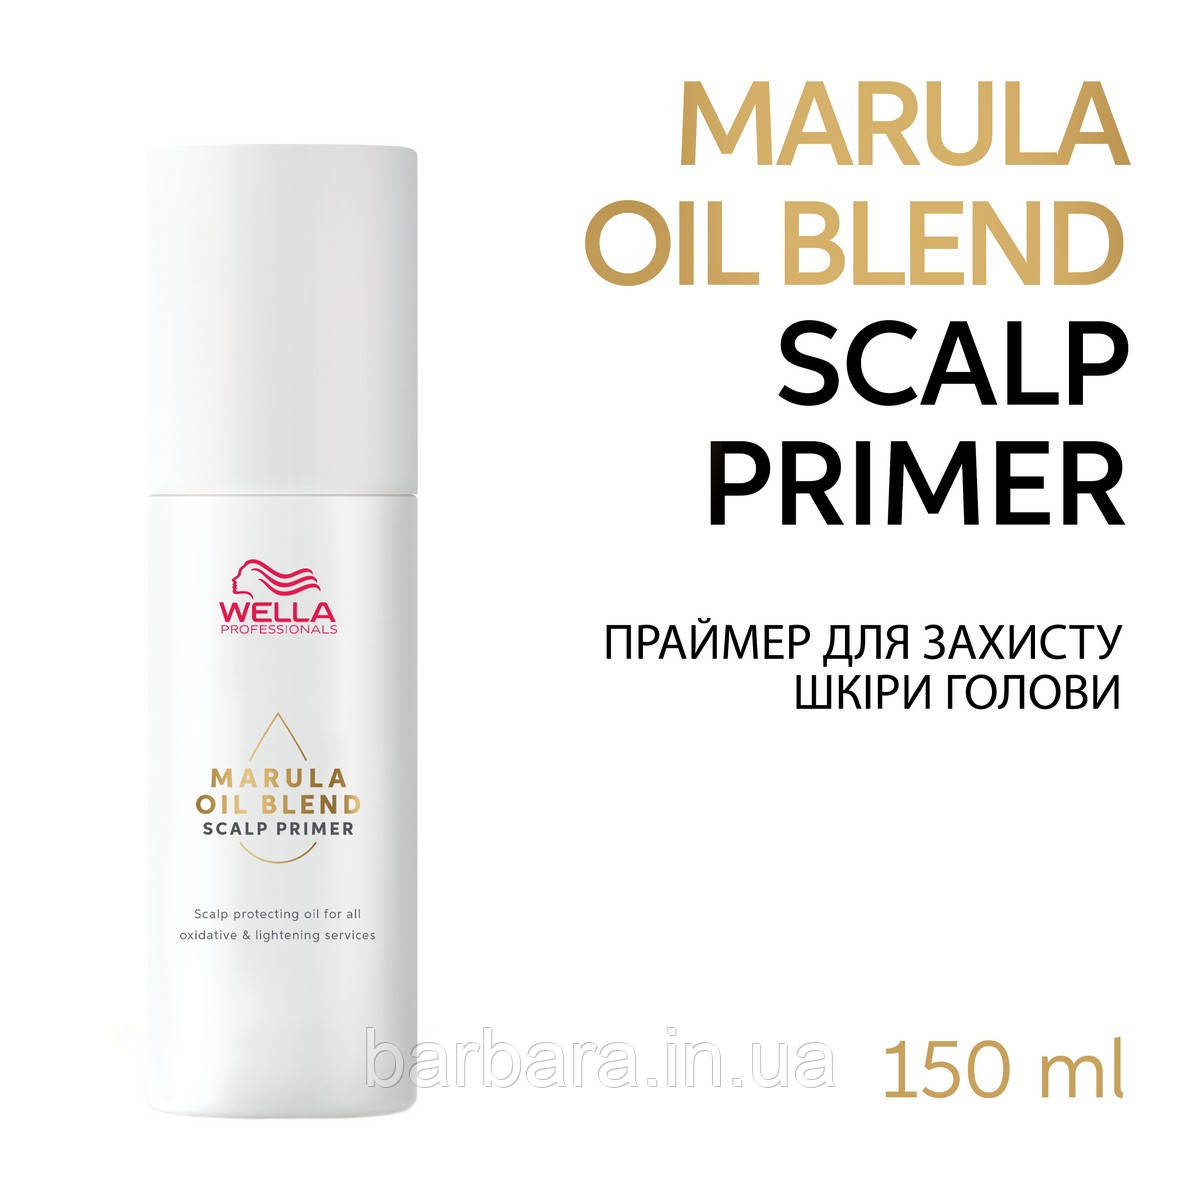 Прймер для захисту шкіри голови Marula Oil Blend Scalp Primer, 150 ml